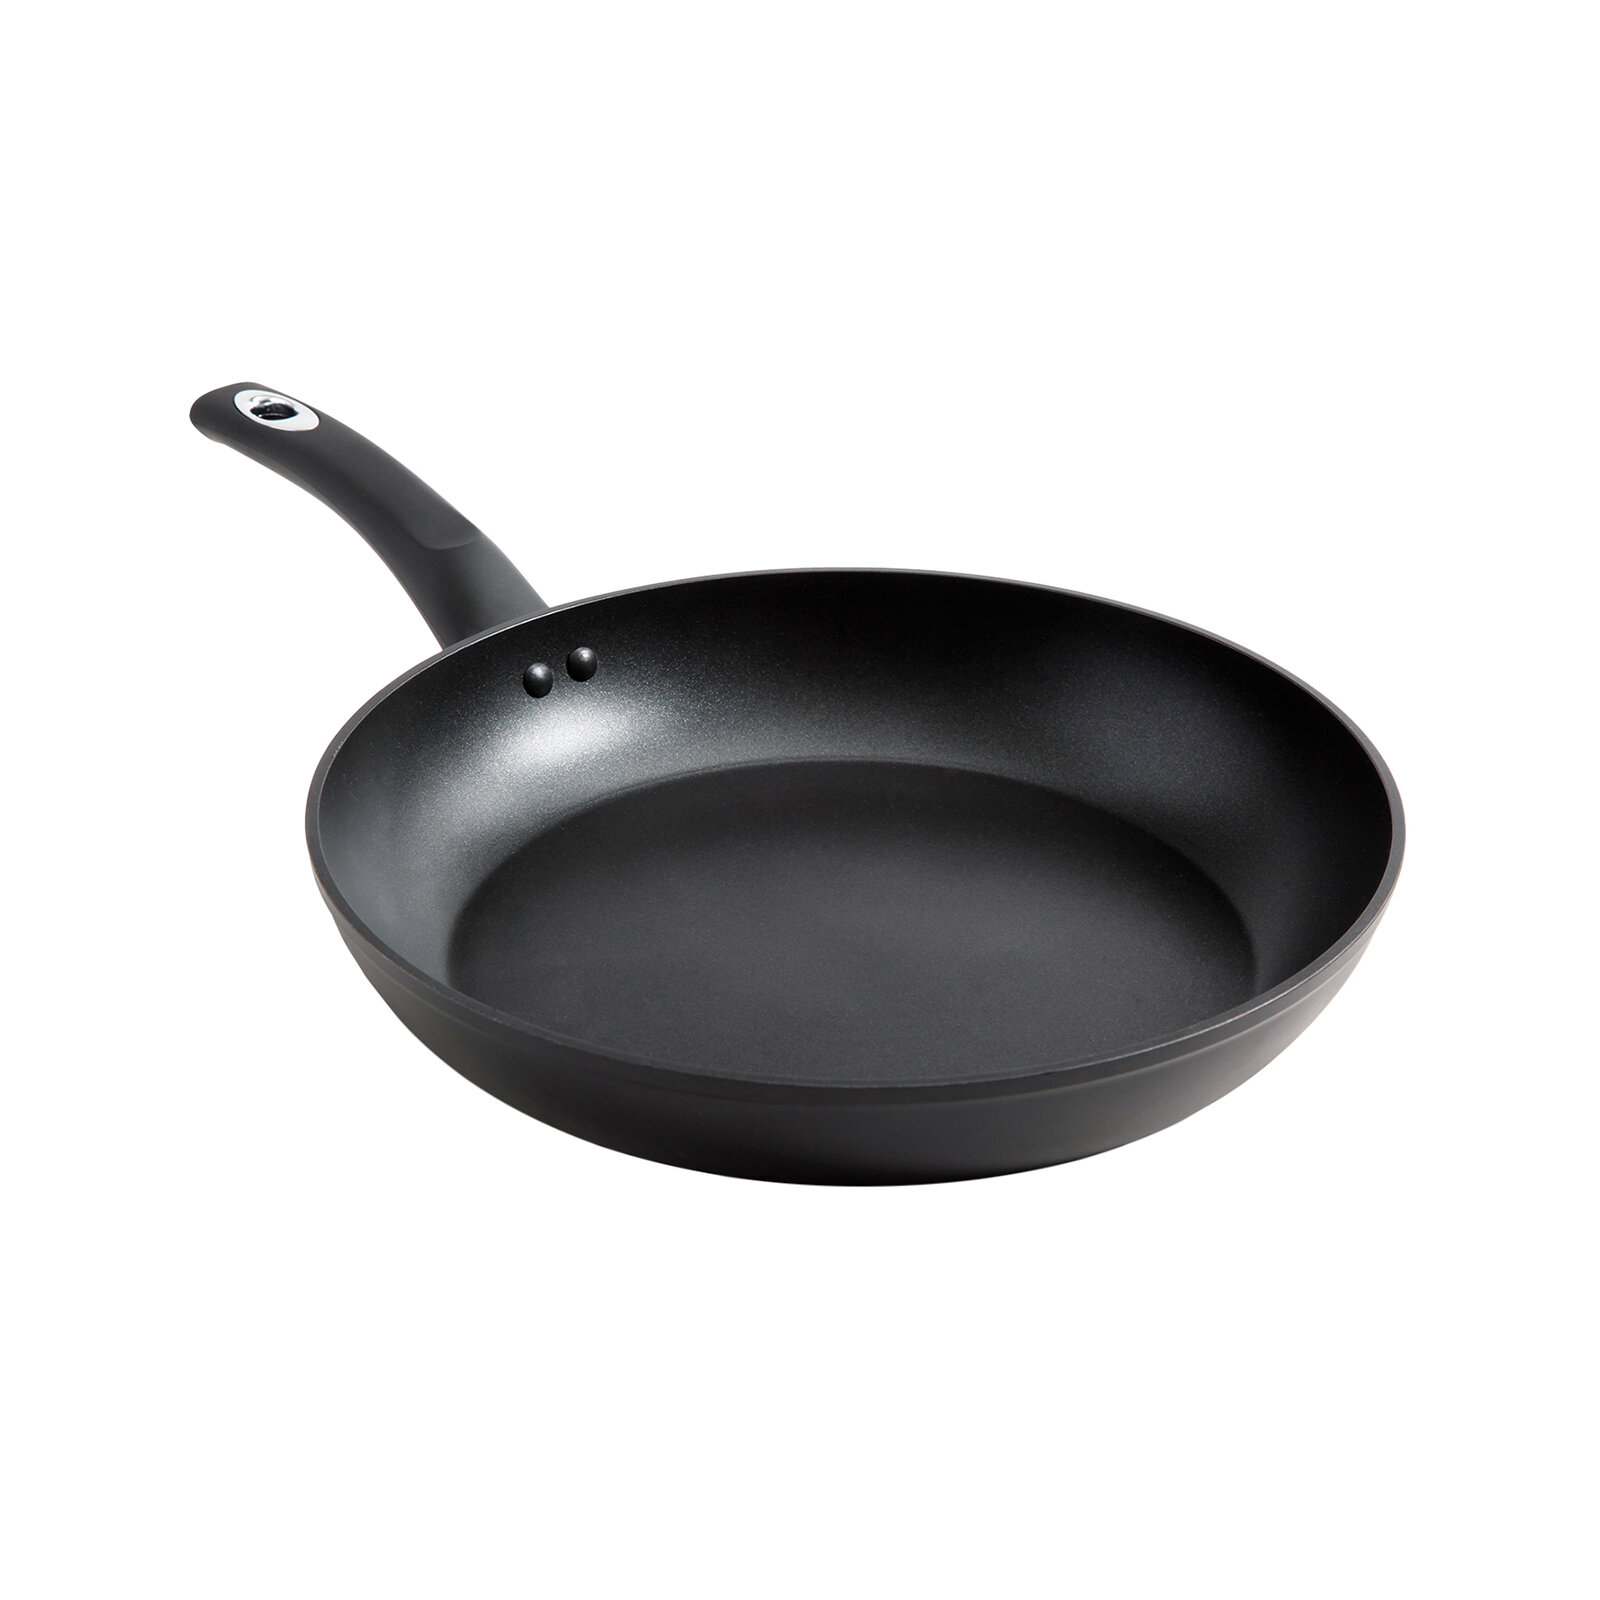 Ecolution Evolve Fry Pan, Non-Stick, Black, 11 Inch